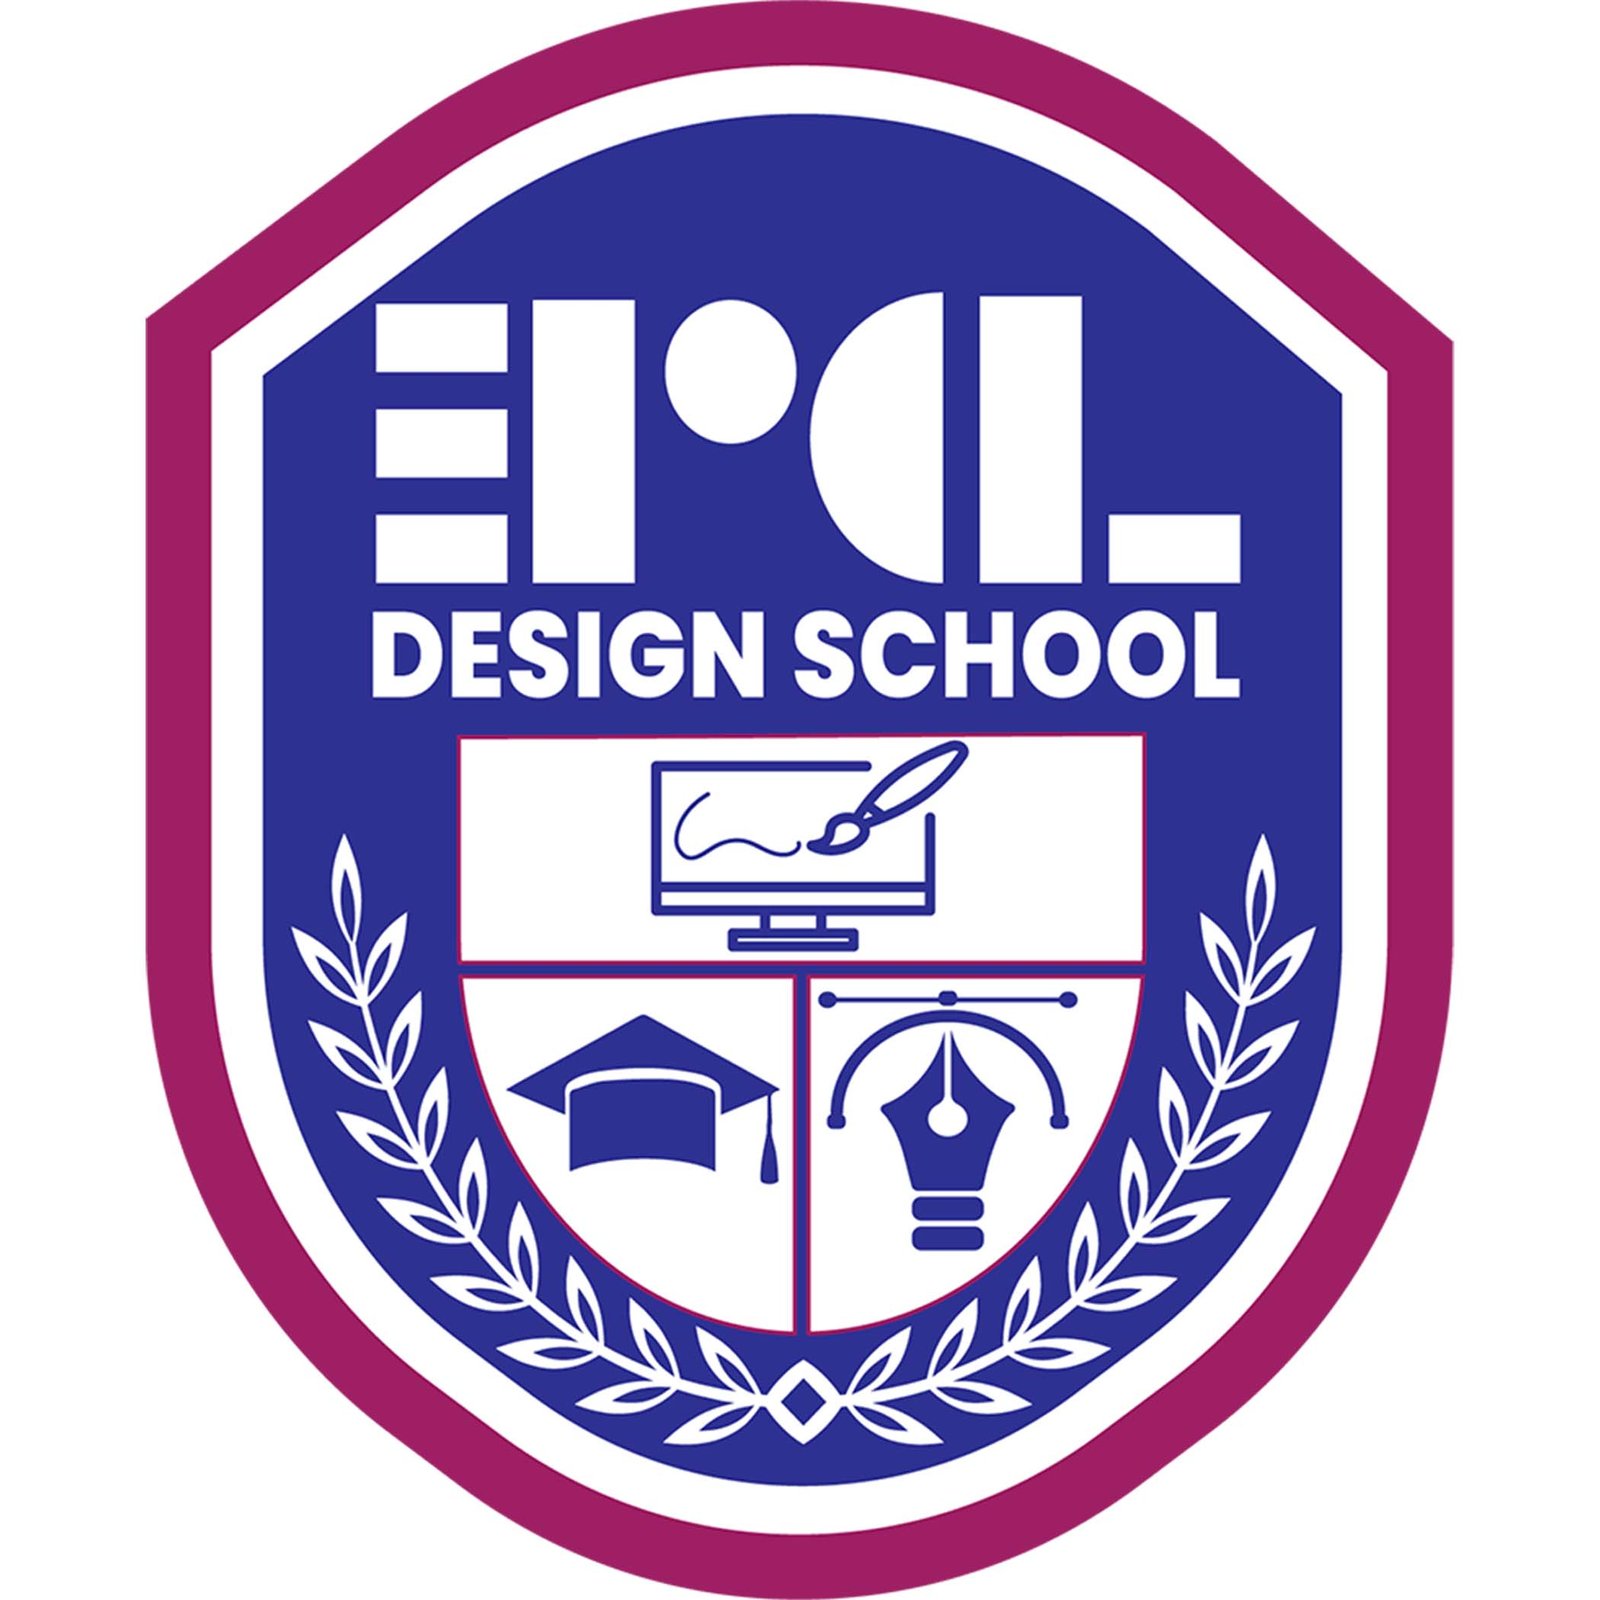 EPDL Design School